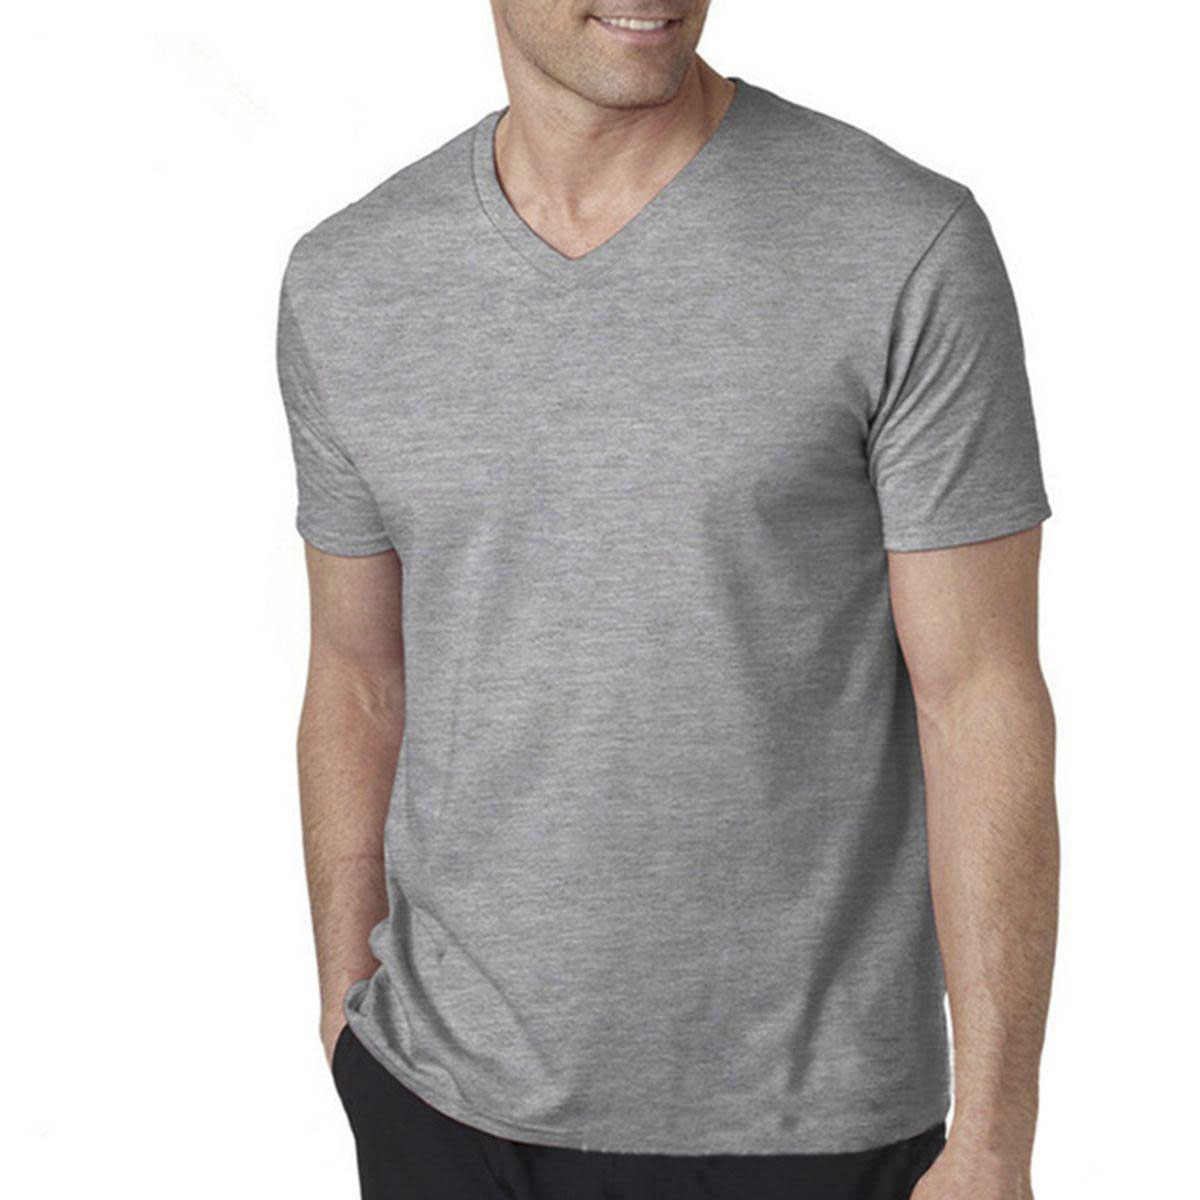 Long V Neck T Shirts Discount Buy, Save 45% | jlcatj.gob.mx